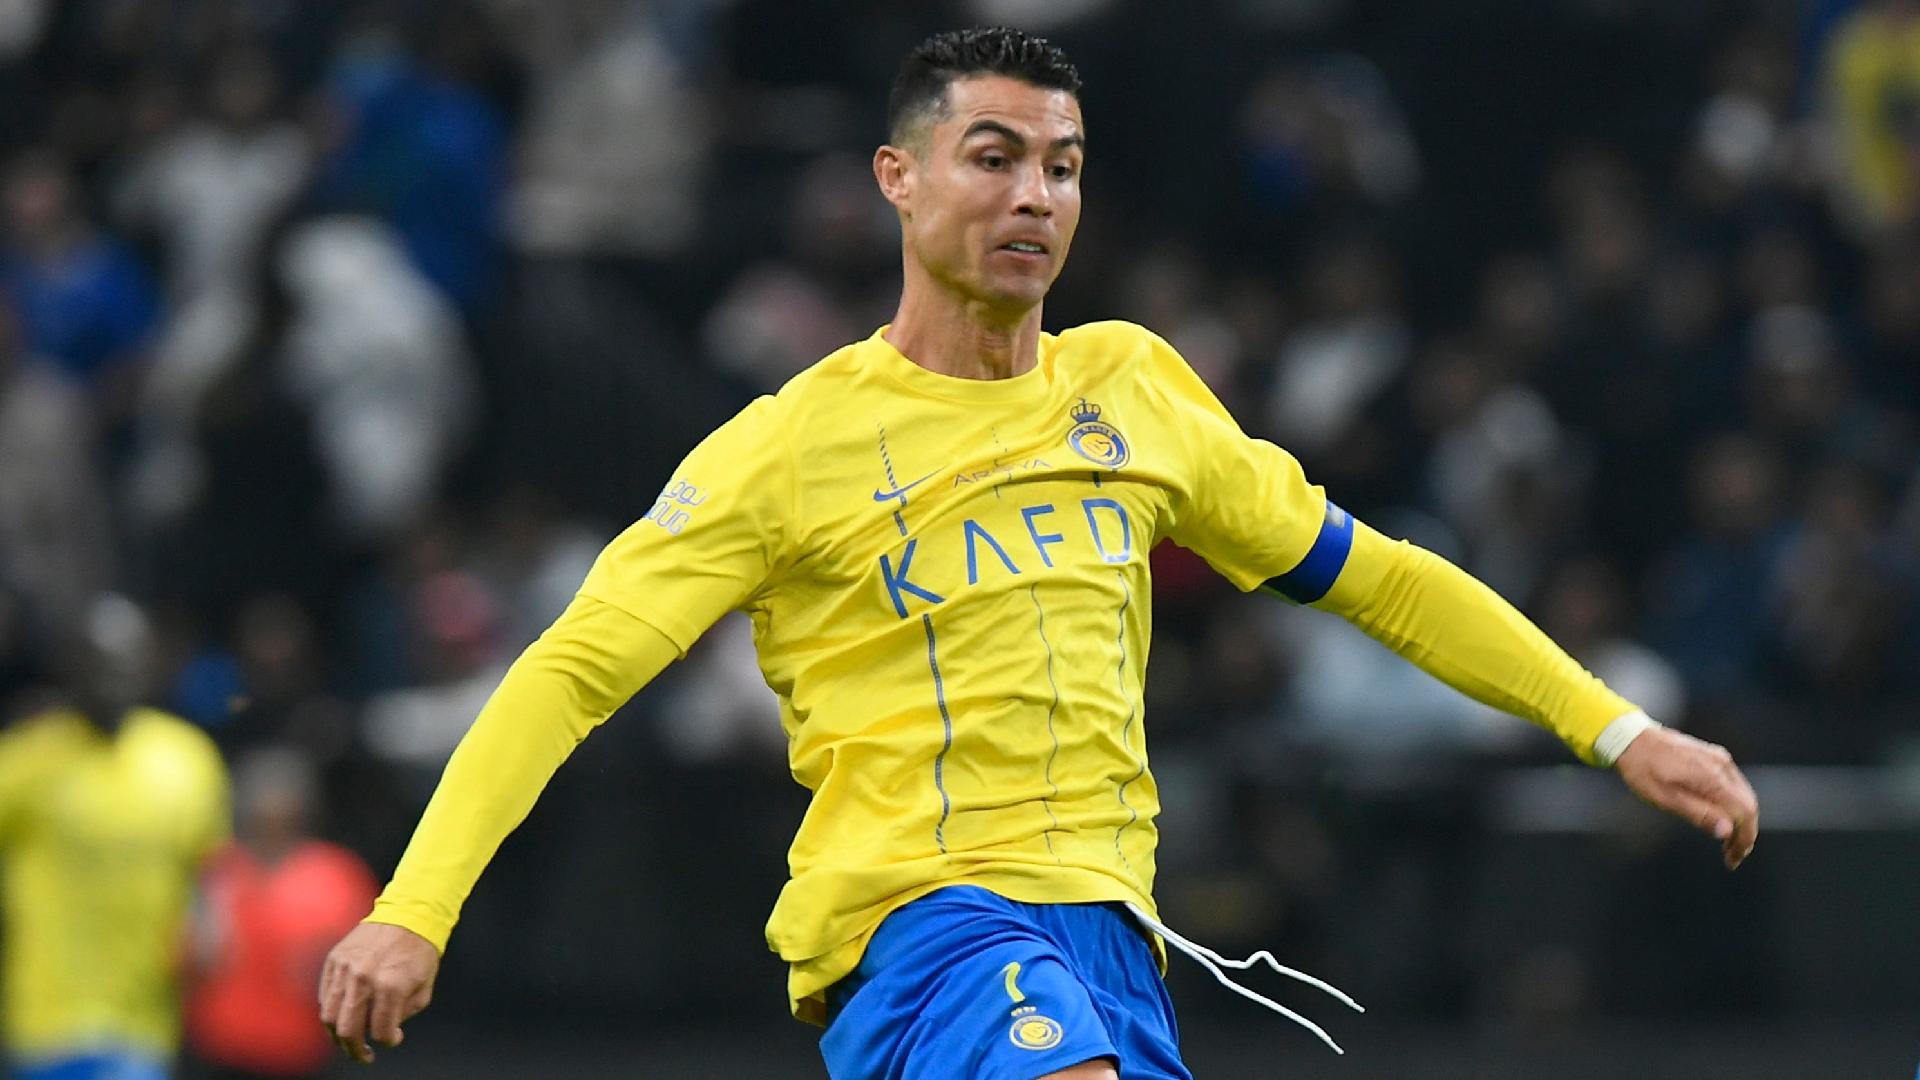 Cristiano Ronaldo opens scoring as Al Nassr claim narrow win over Al Fateh